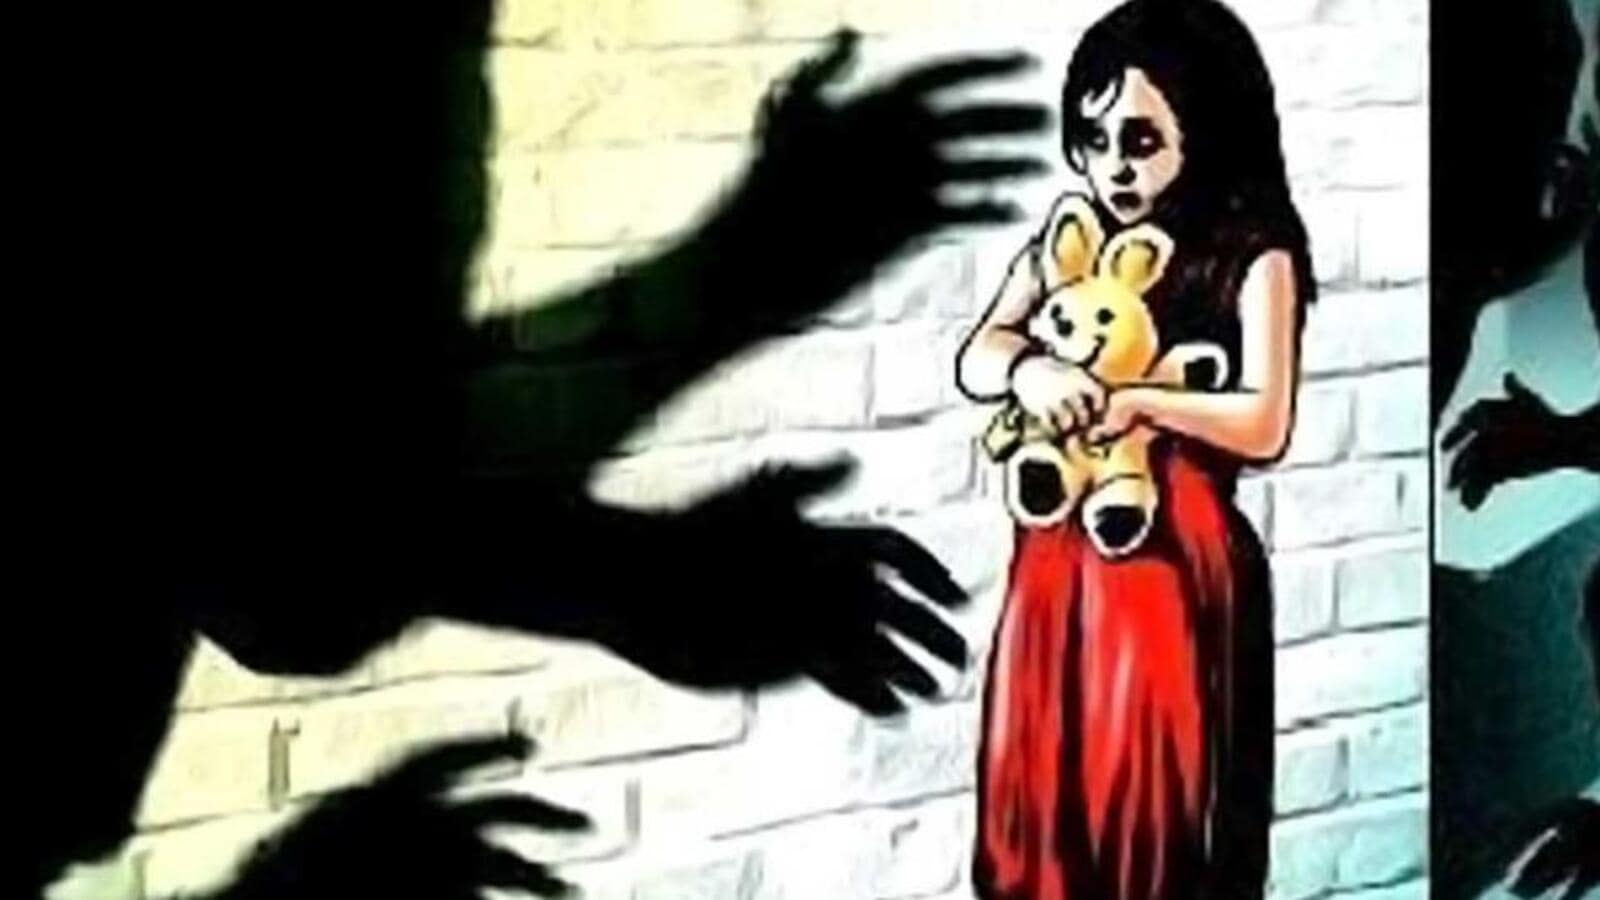 Zabardasti Rape Girls Mypornwapme Com - 8 men rape, film and blackmail 17-year-old Rajasthan girl. Then release  video - Hindustan Times